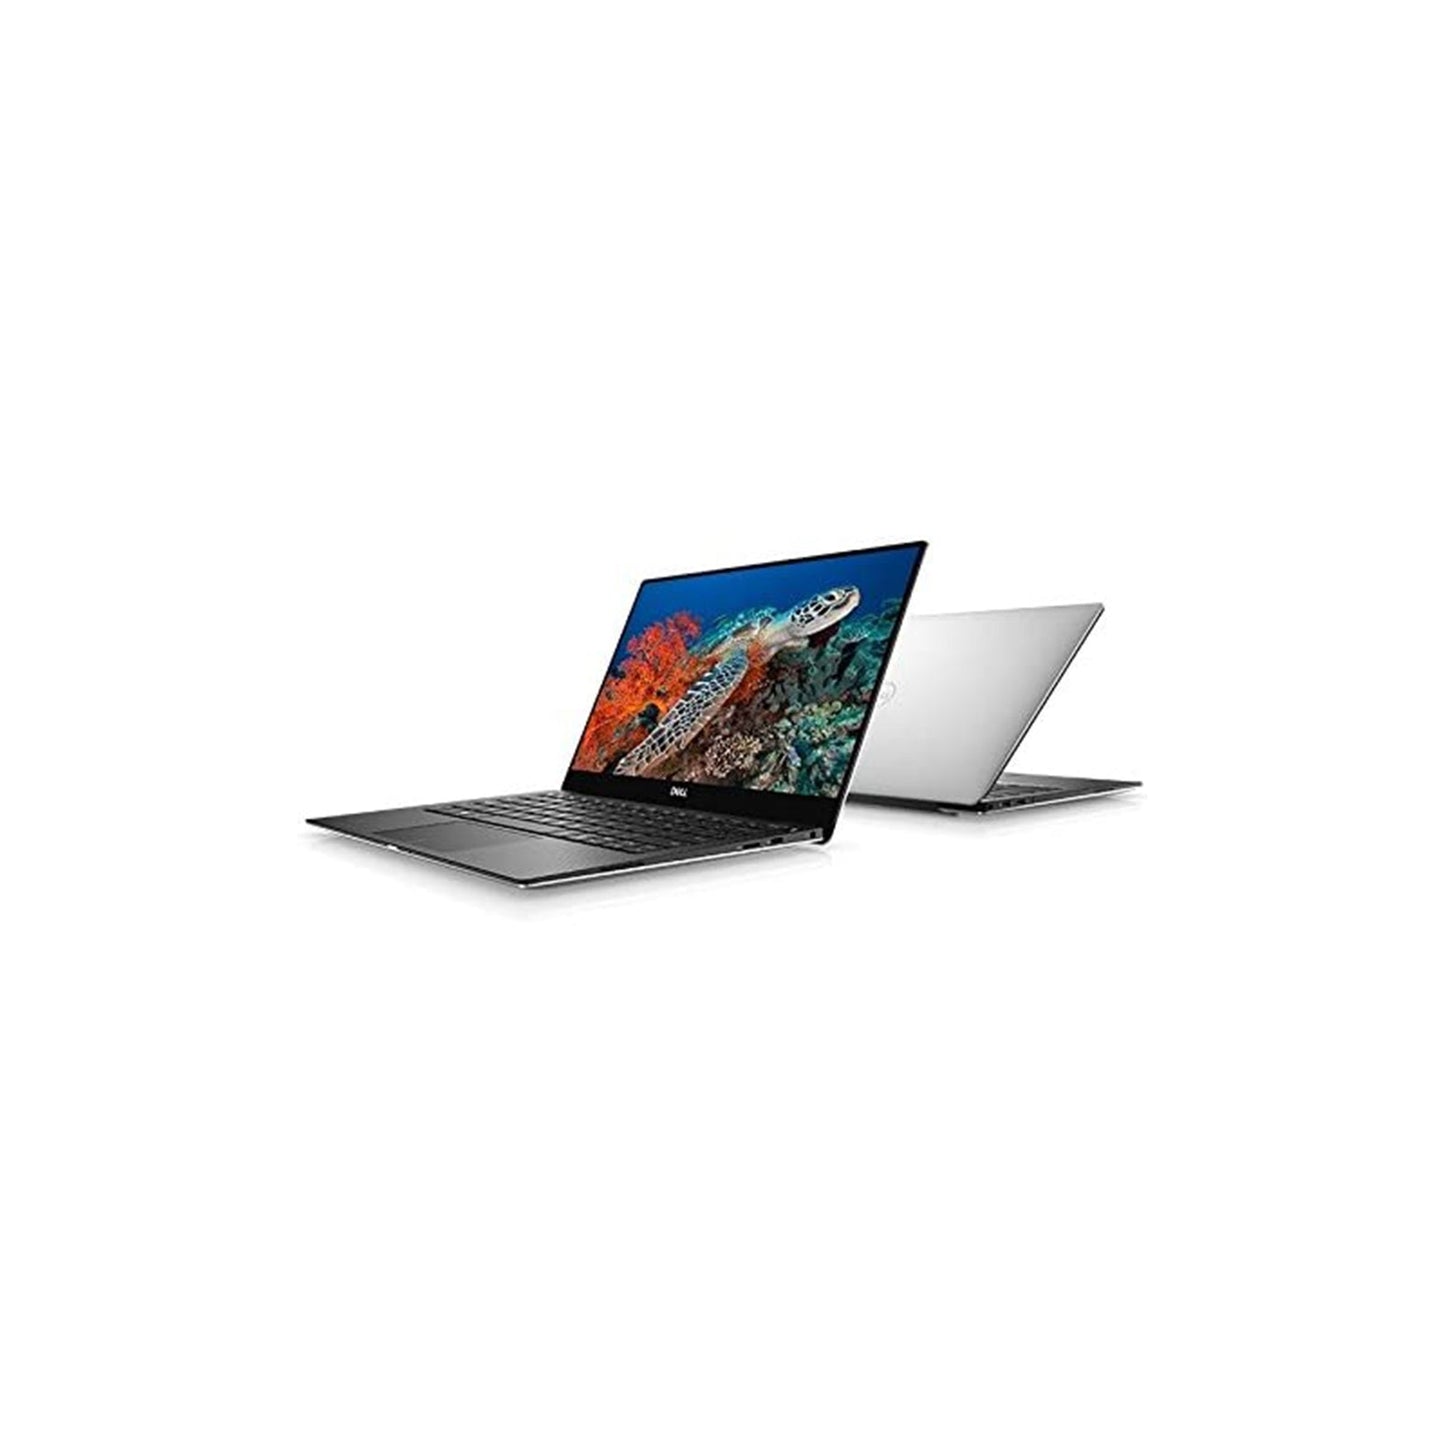 Dell XPS 13 9360 Touch Laptop - Intel Core I7 Gen 7 - 8 GB - 256 GB SSD - Intel(R) Iris Graphics 640 - Windows 10